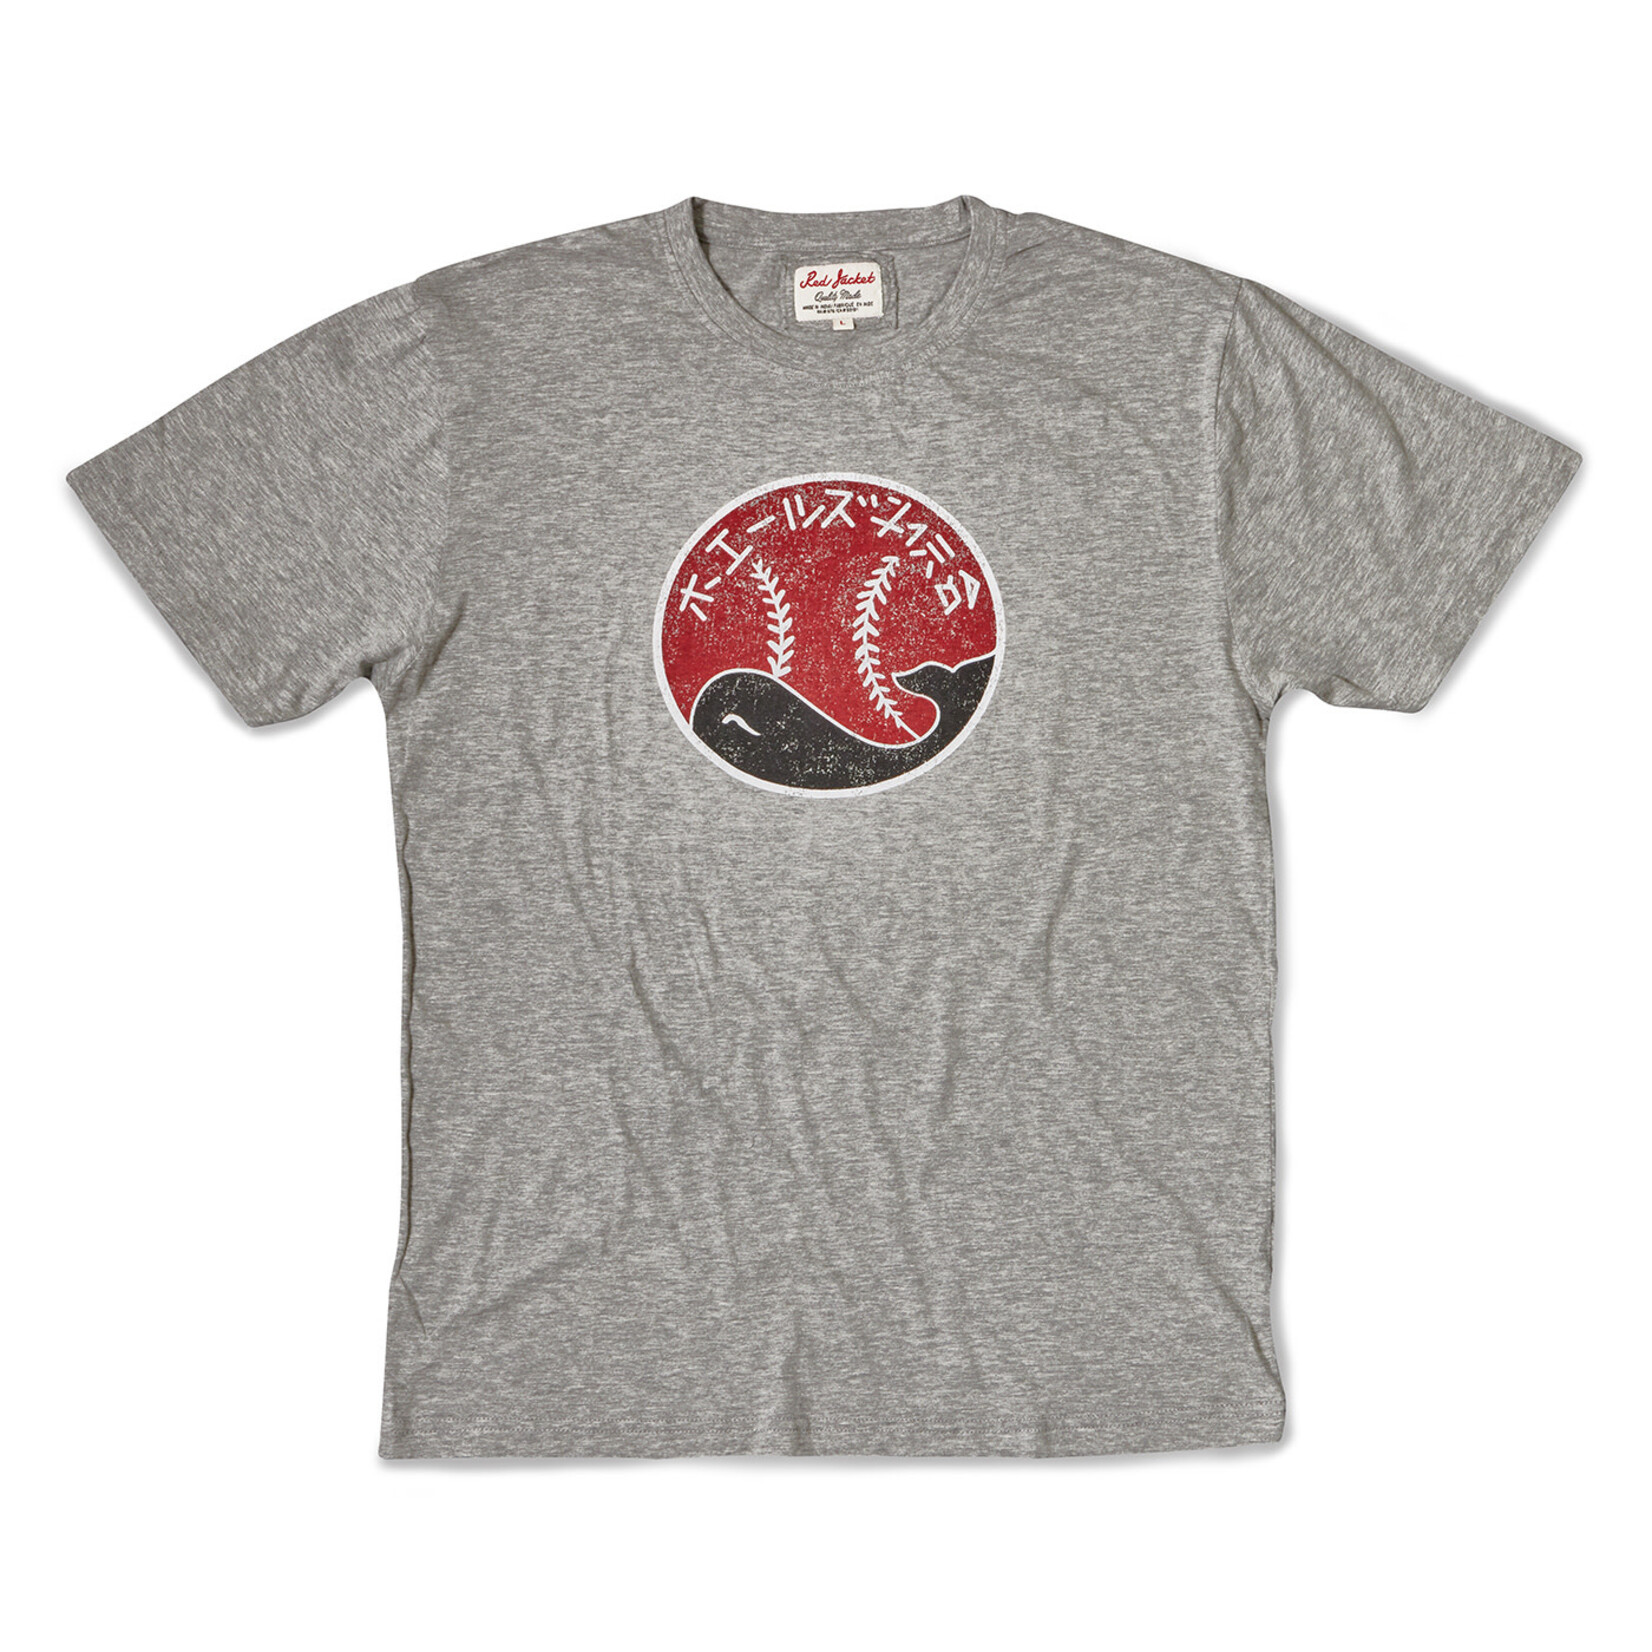 American Needle Taiyo Whales T-shirt